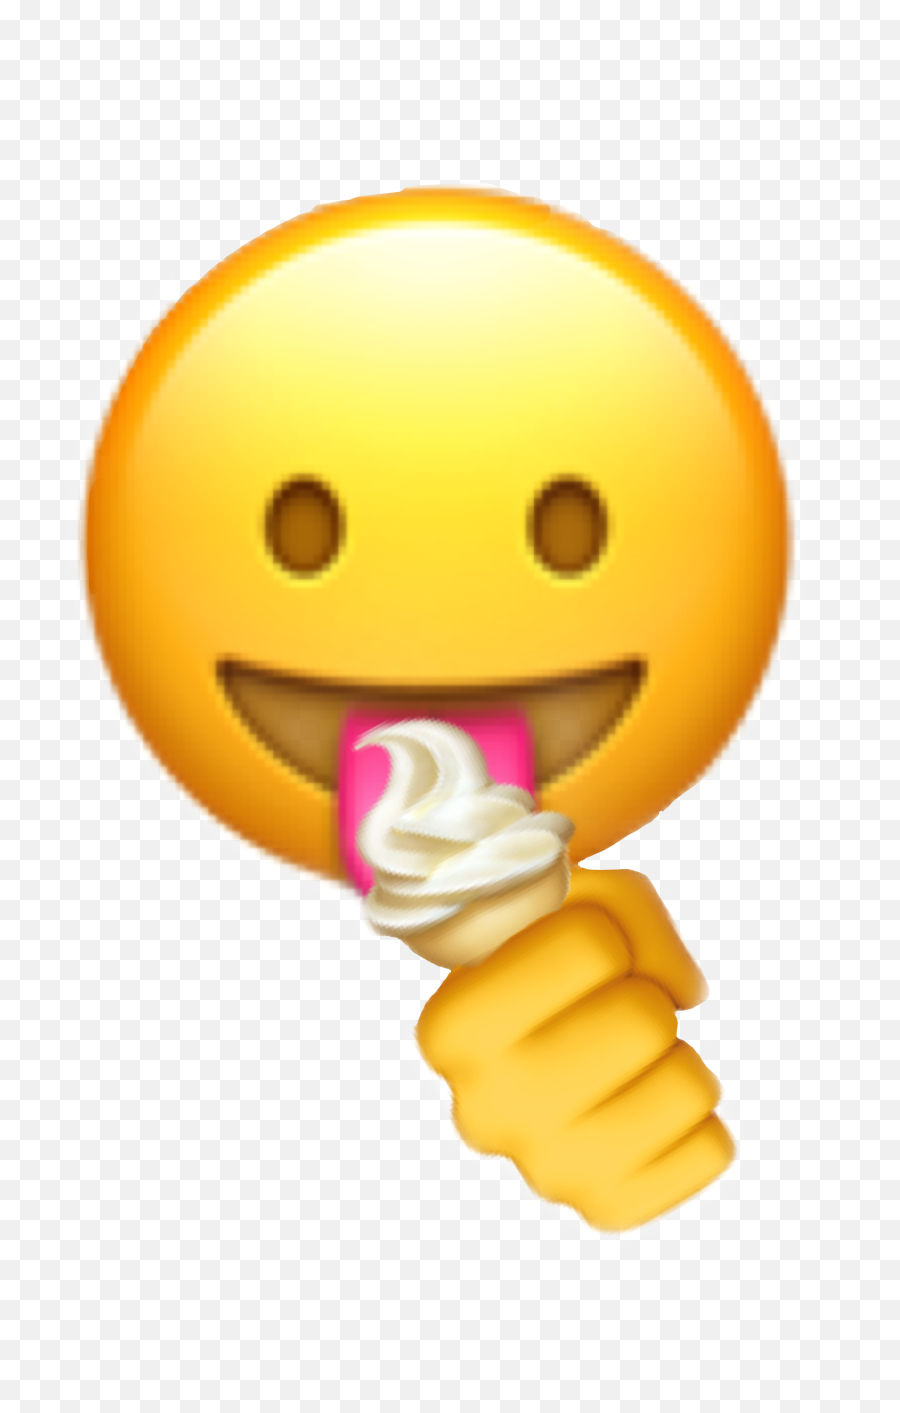 Icecreamemoji Sticker - Happy,Licking Emoji